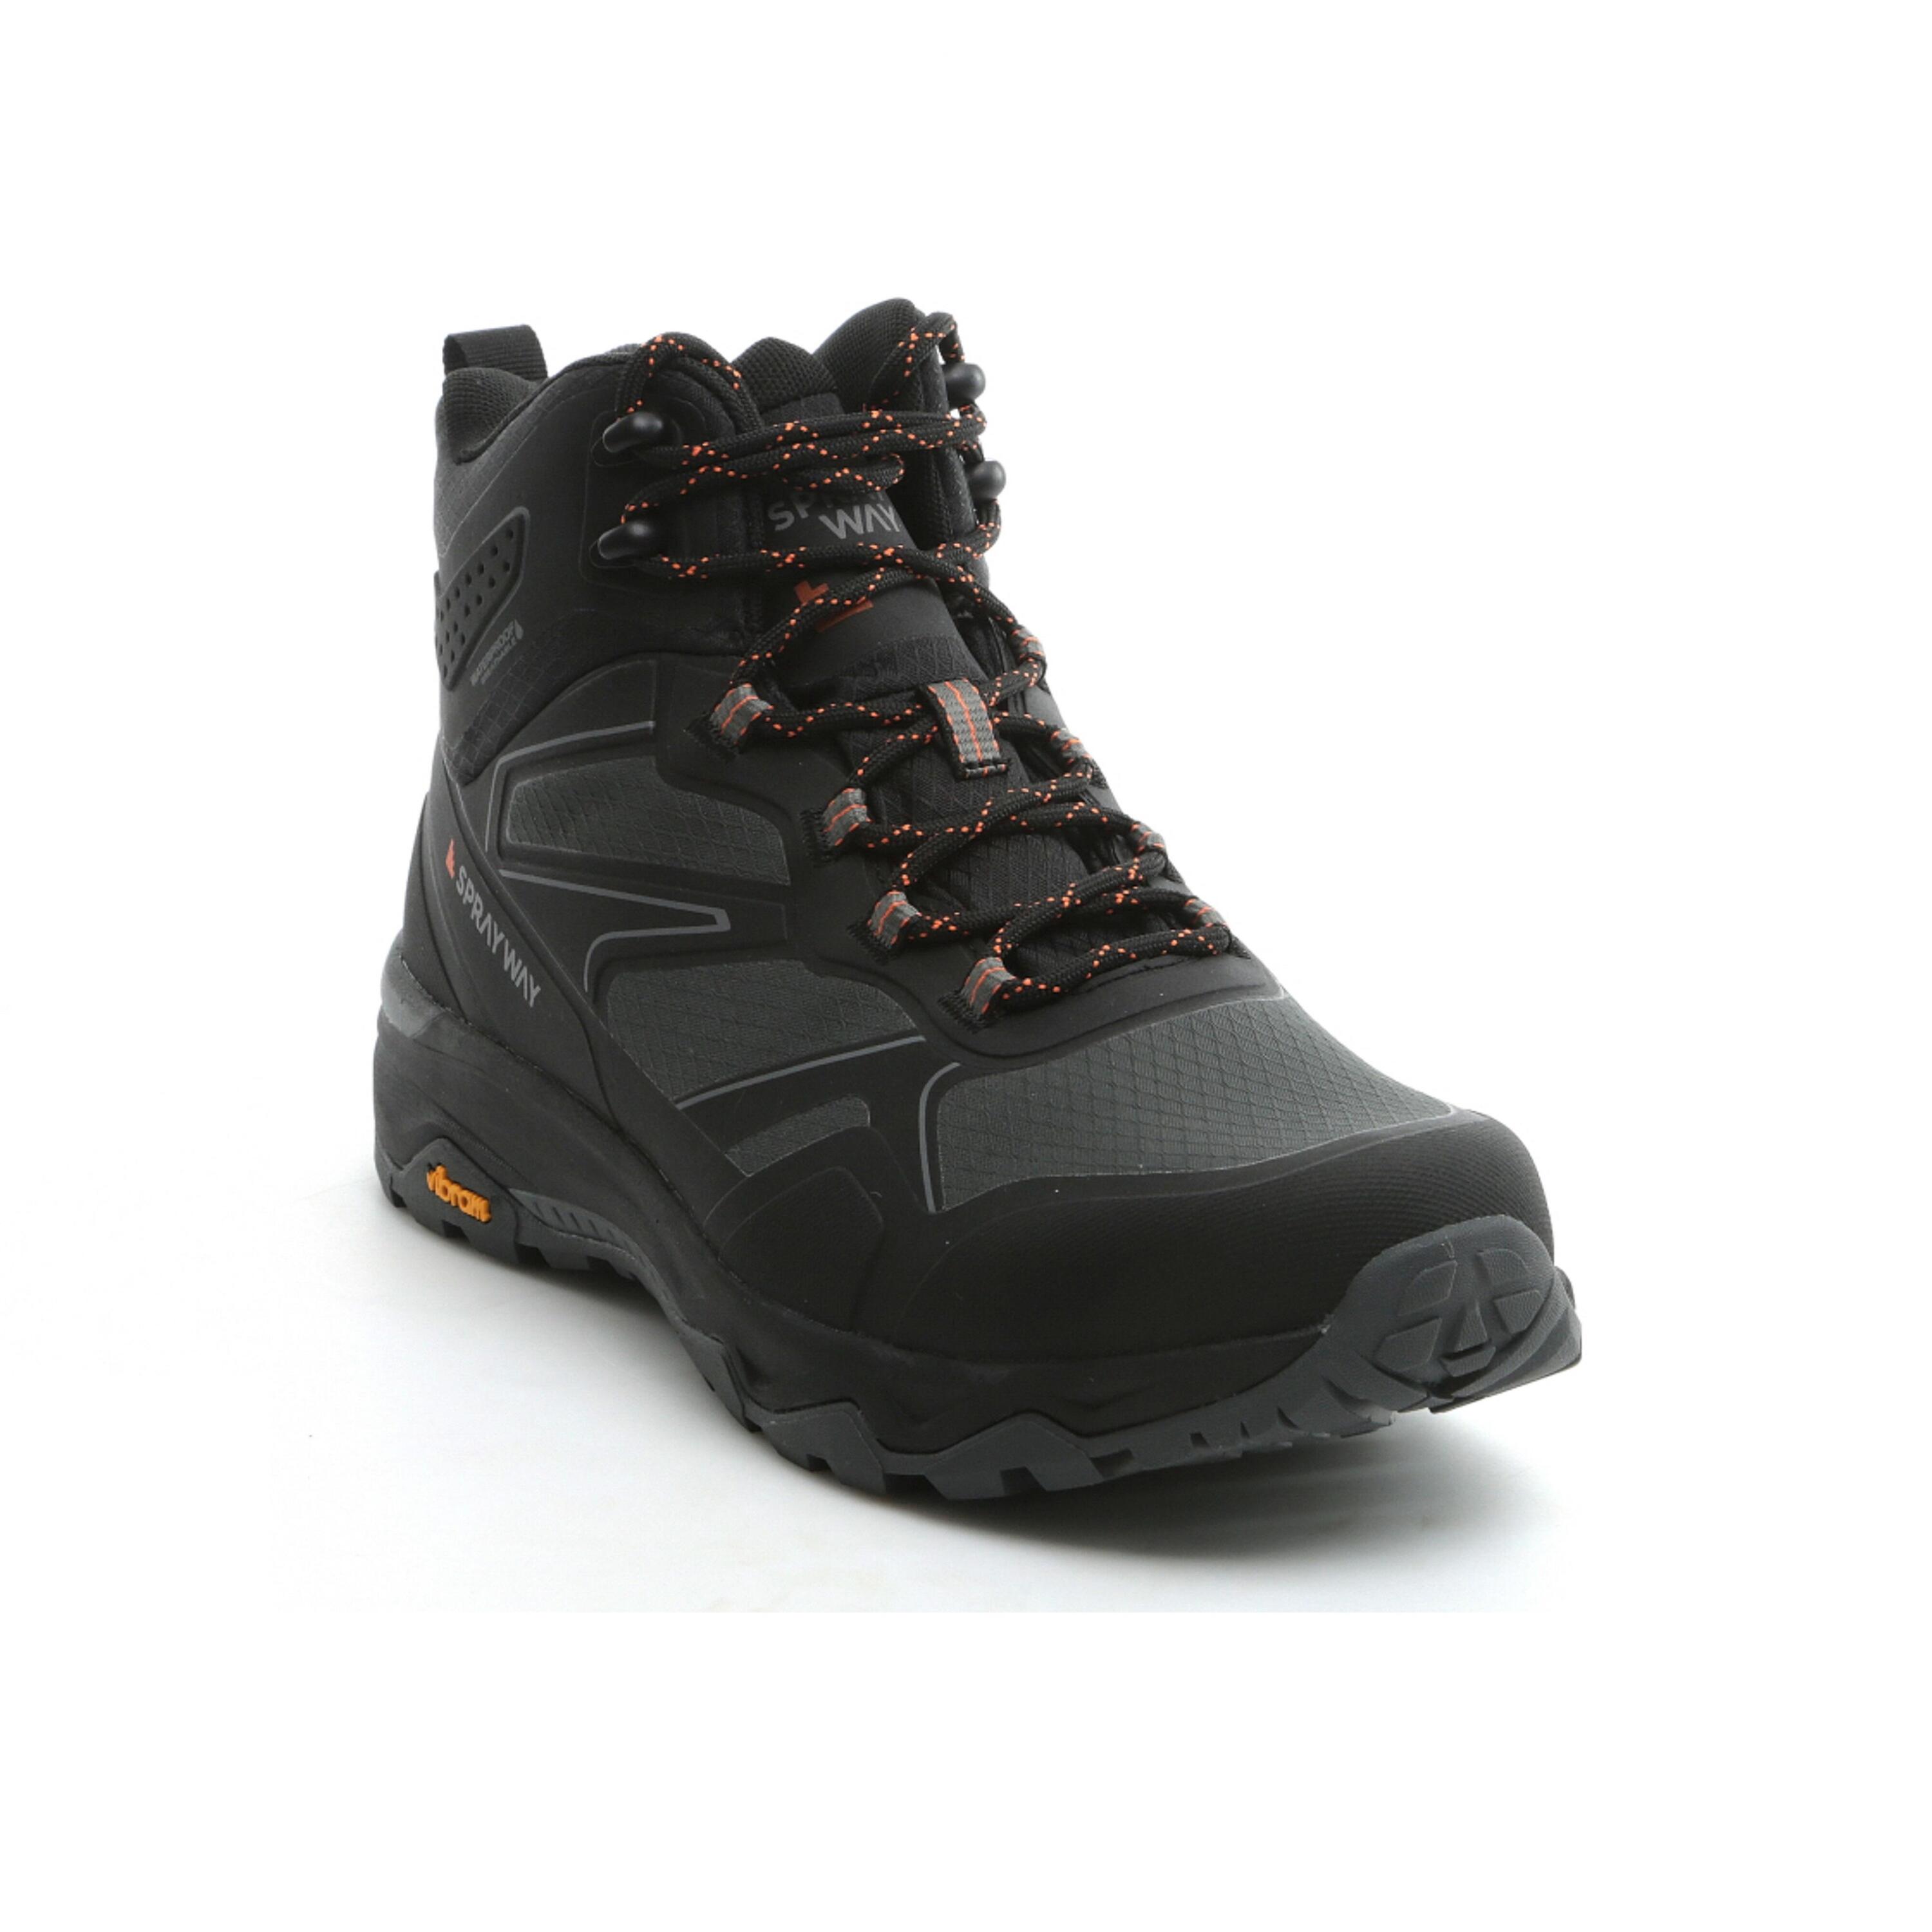 SPRAYWAY Men's waterproof walking boots - Sprayway Tarn mid - Black